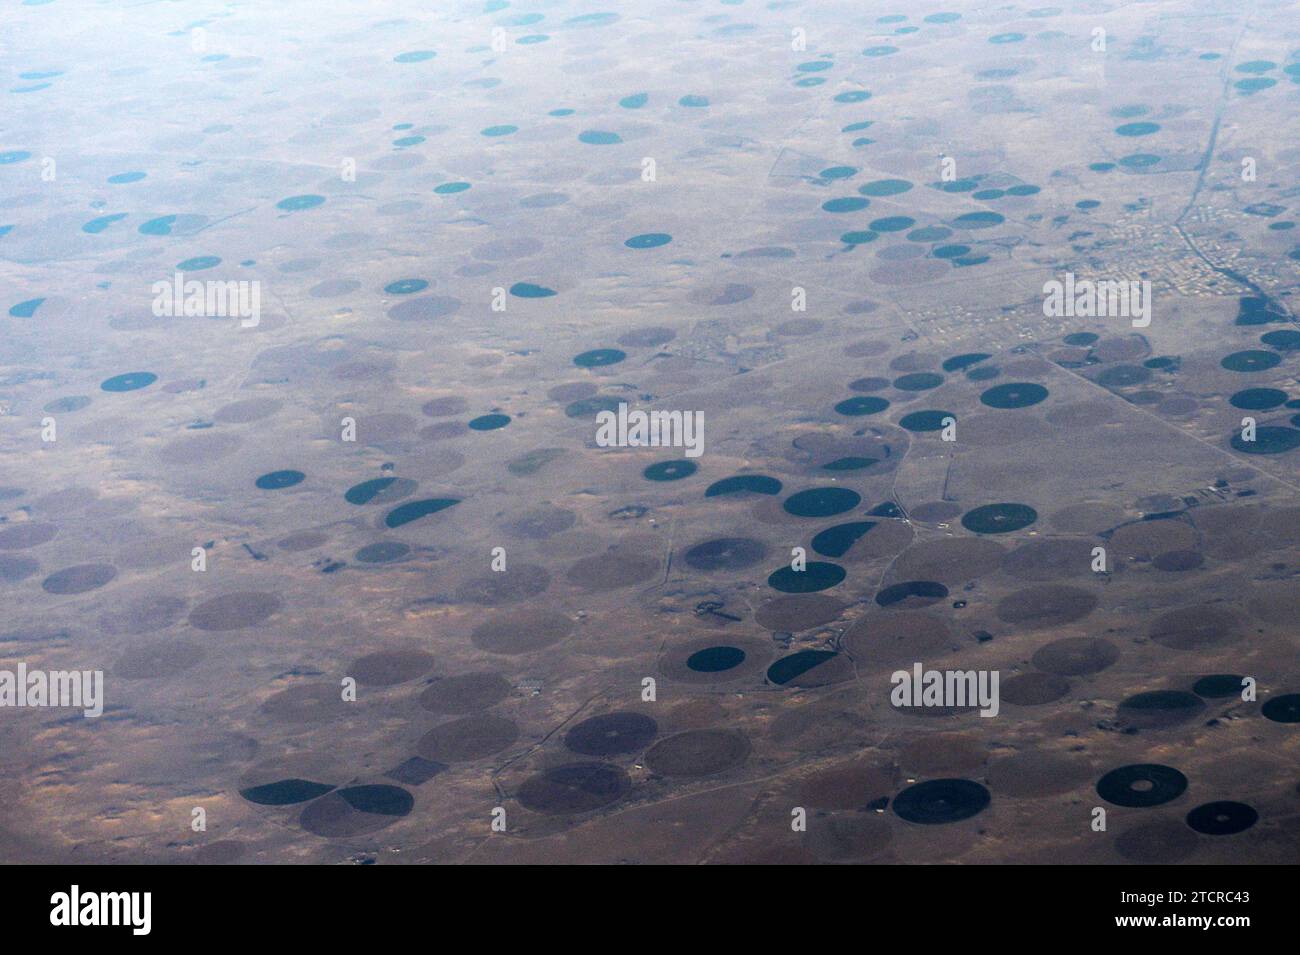 Aerial view of circular agriculture fields in the Arabian desert in Saudi Arabia. Stock Photo